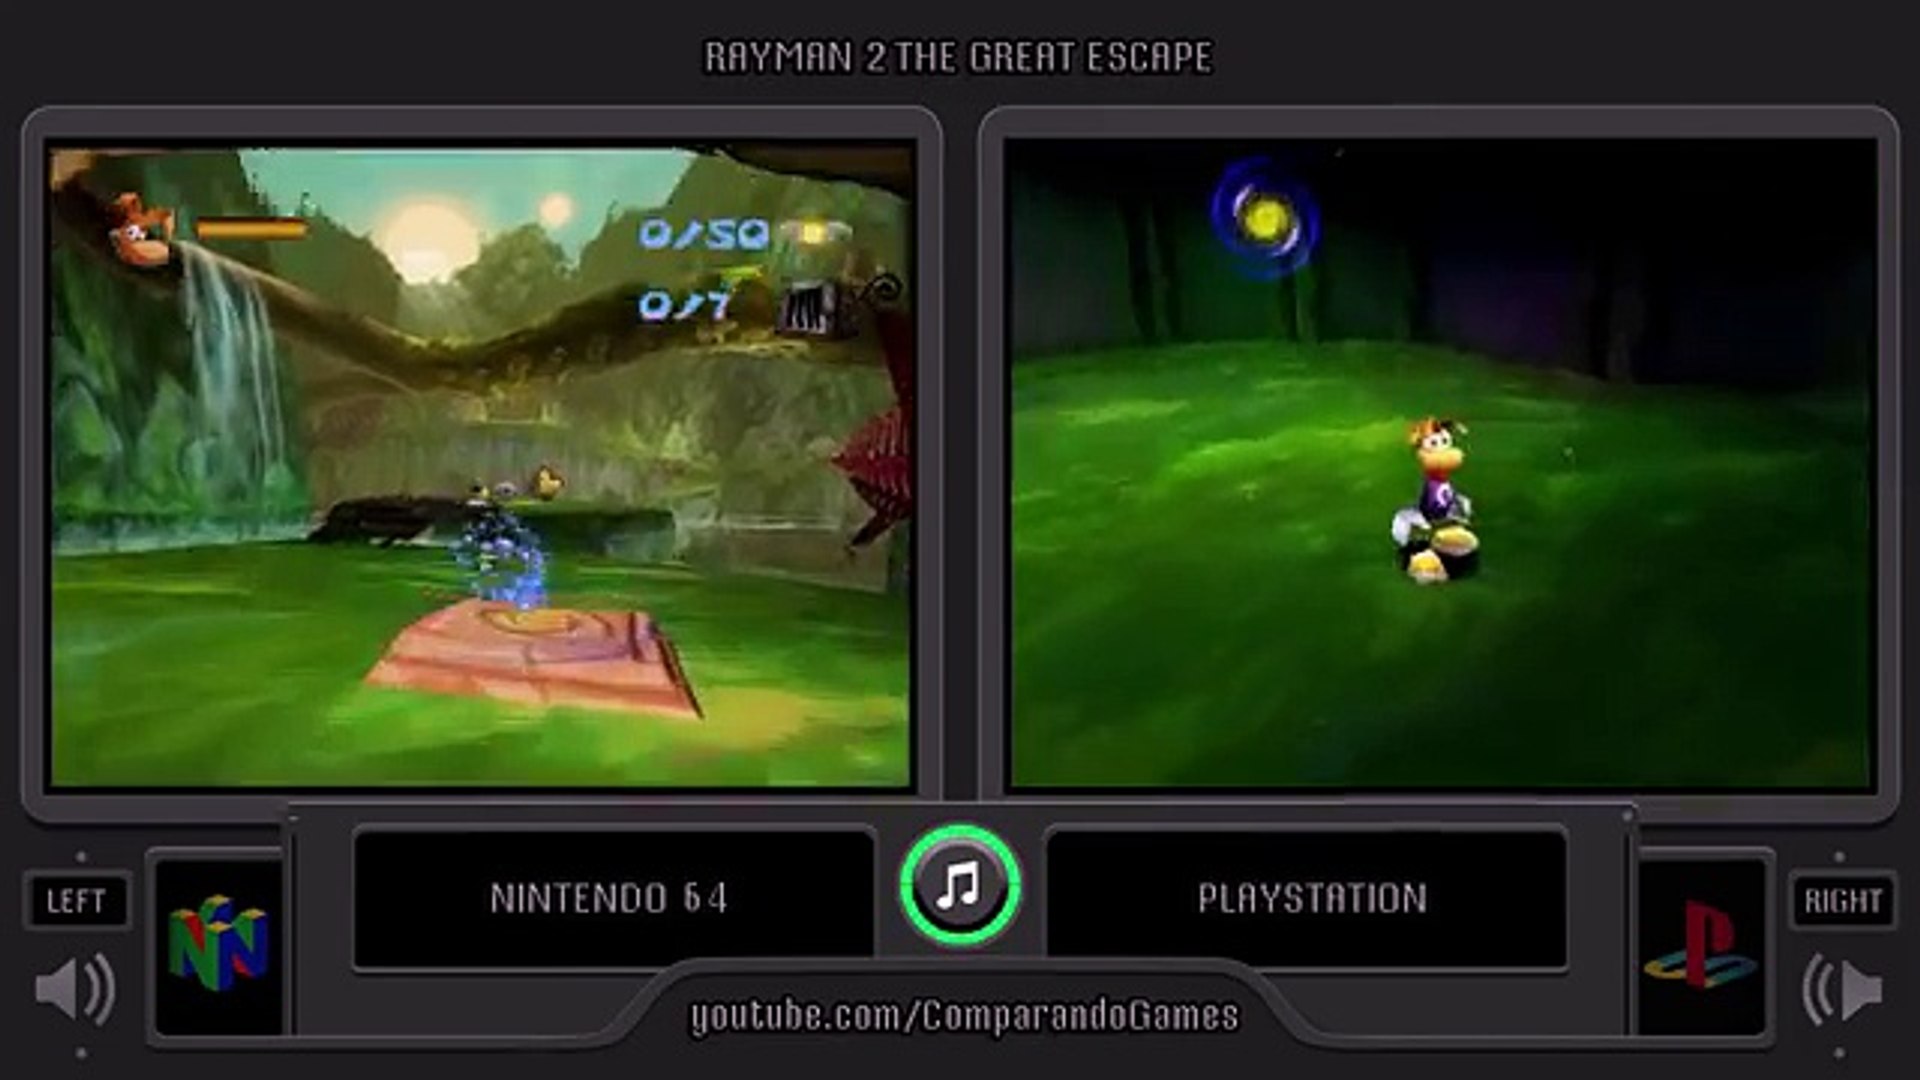 2 (Nintendo 64 vs Playstation) by Side Comparison Vidéo Dailymotion